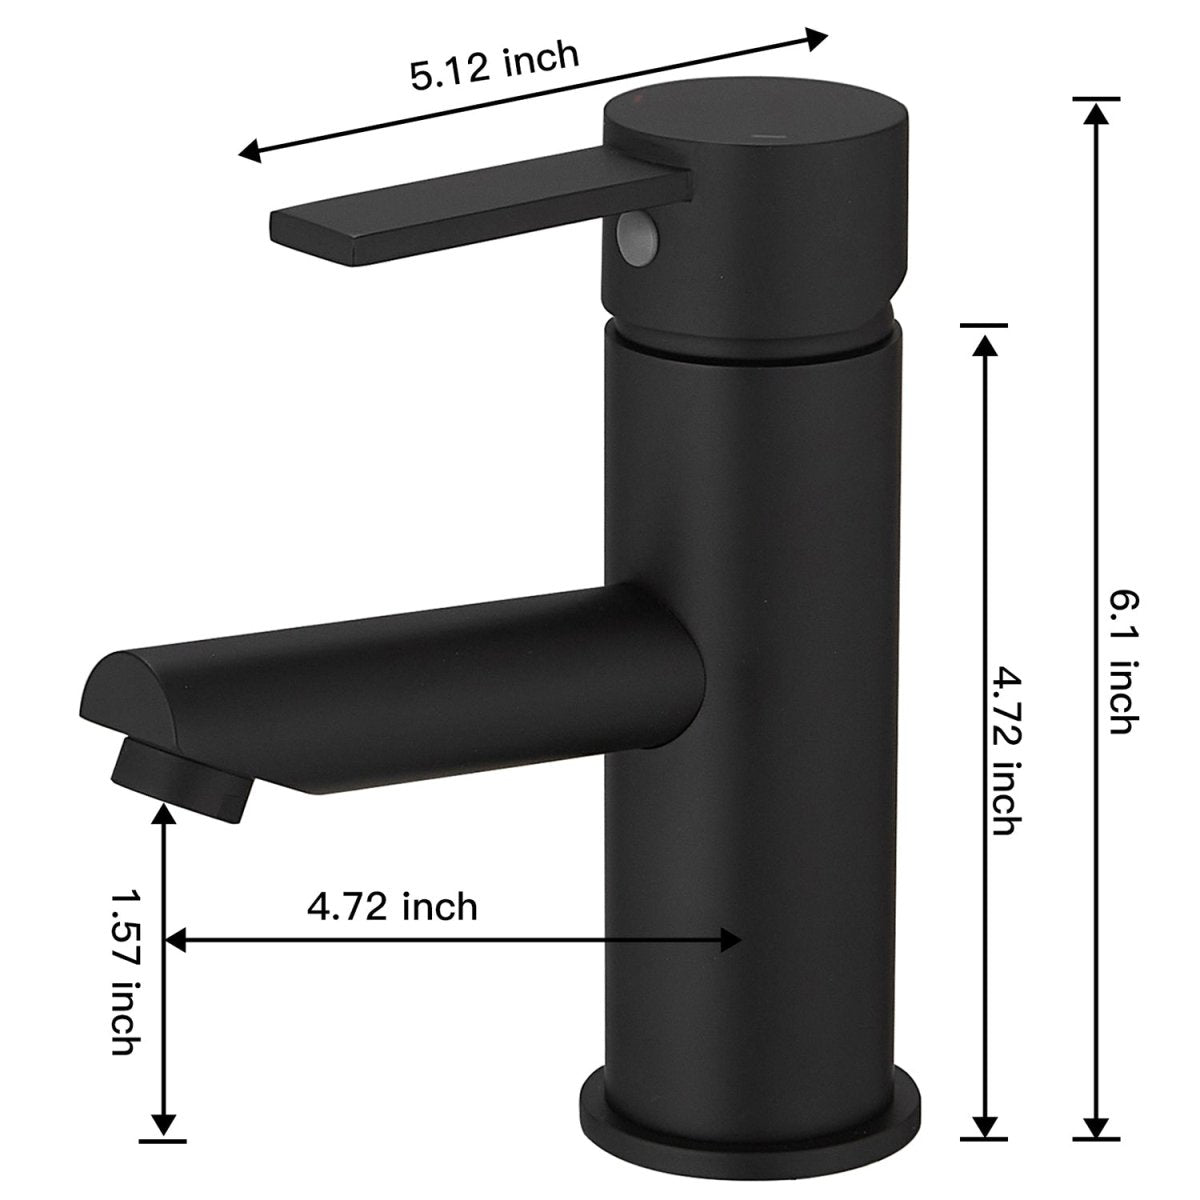 Single Hole Single Handle Bathroom Faucet in Matte Black - buyfaucet.com